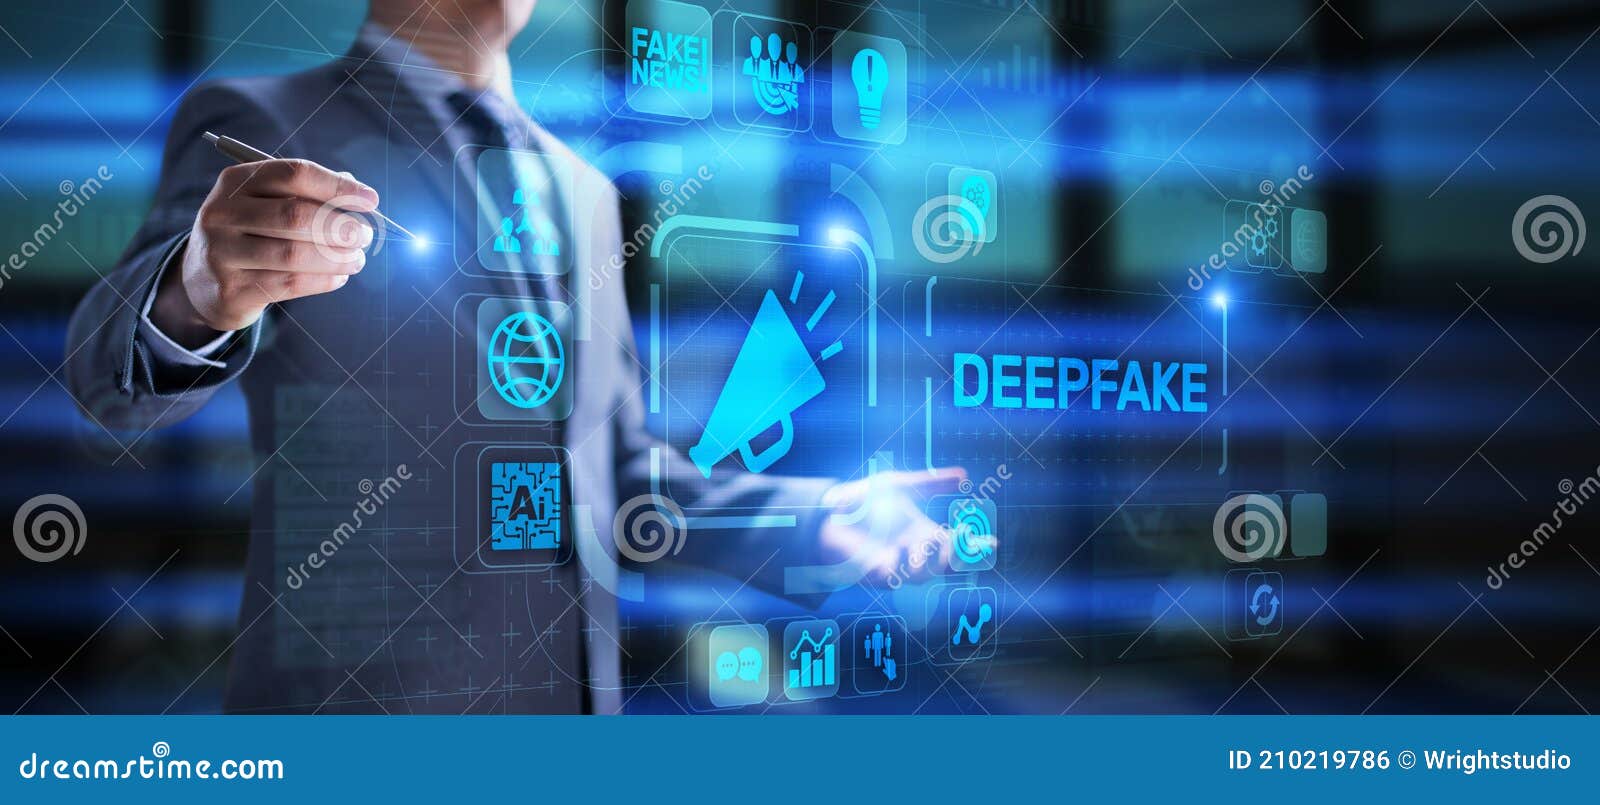 deepfake deep learning fake news generator modern internet technology concept.